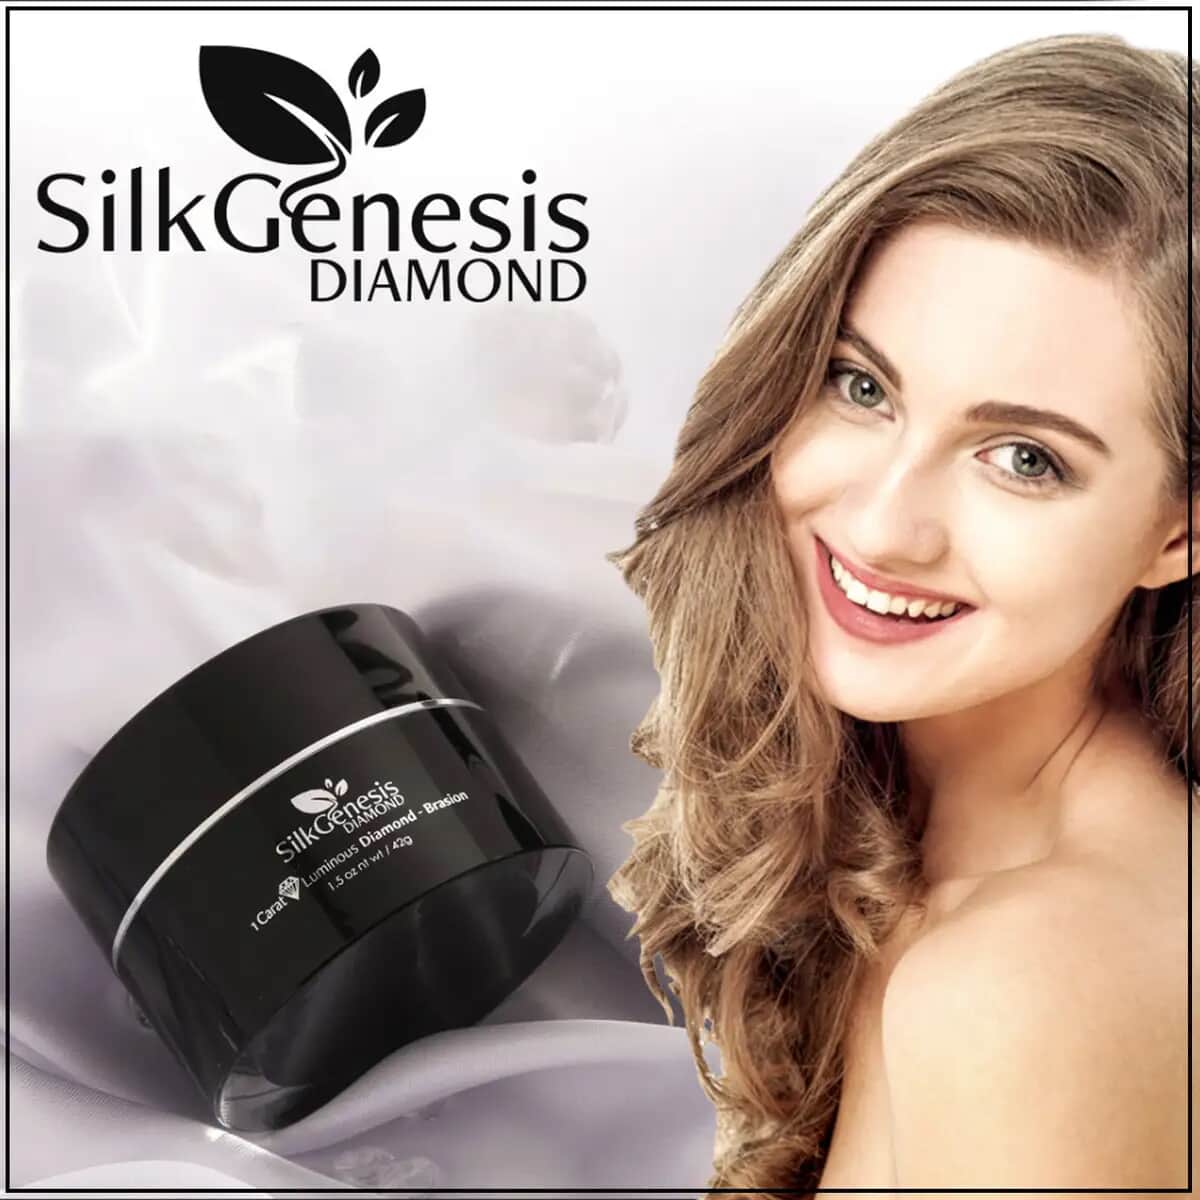 Silk Genesis Luminous Diamond Brasion Facial Scrub Exfoliates Skin Reduce Lines Wrinkles image number 3